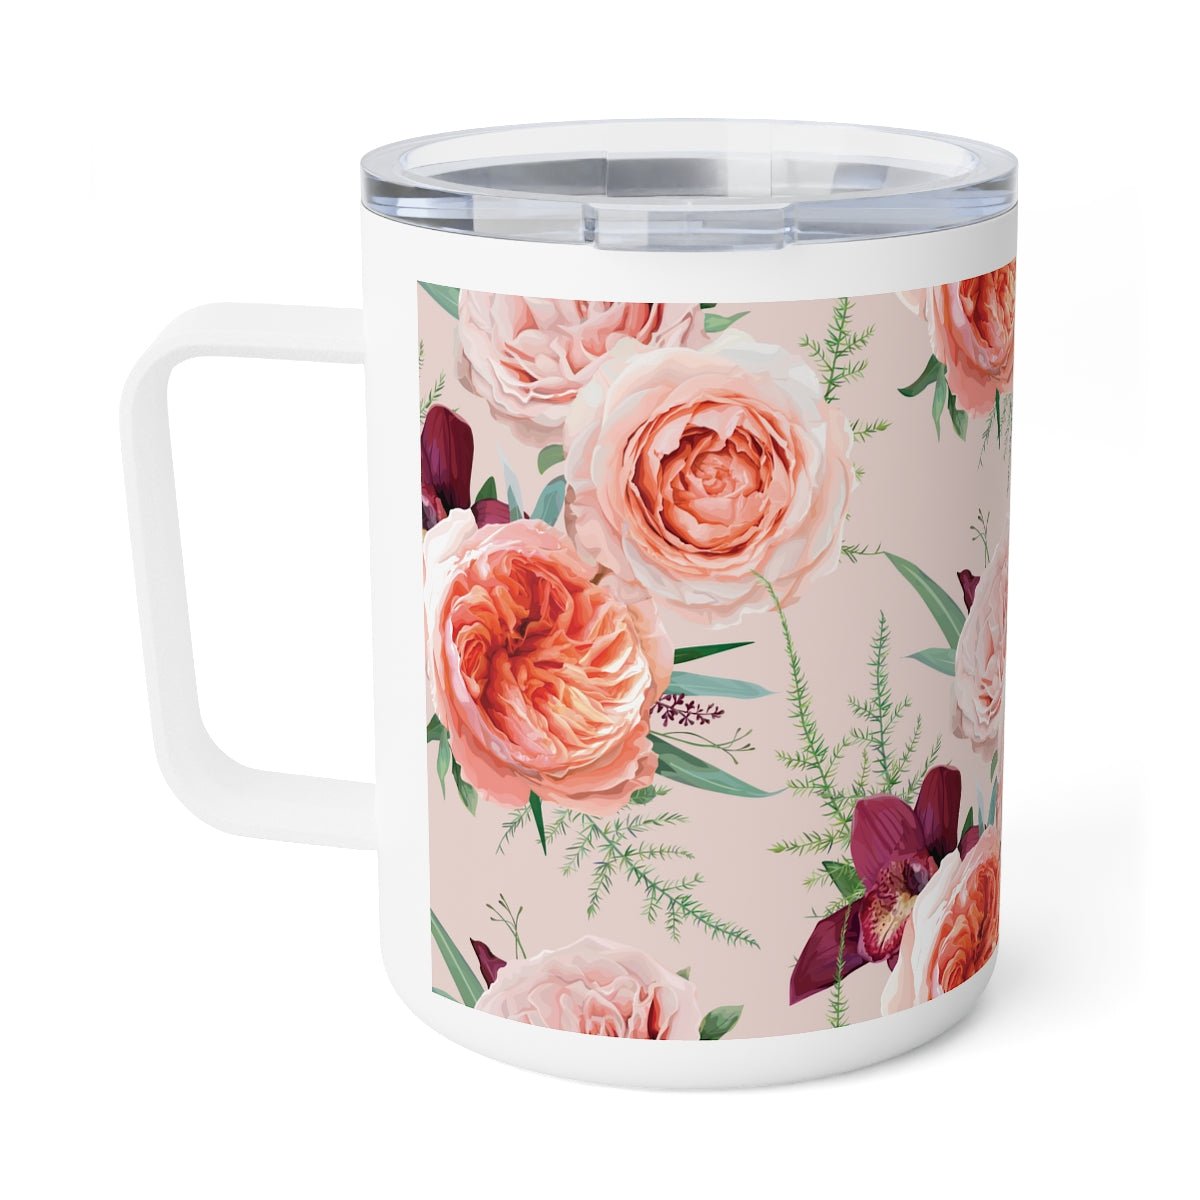 Blush Roses Insulated Coffee Mug, 10oz - Puffin Lime